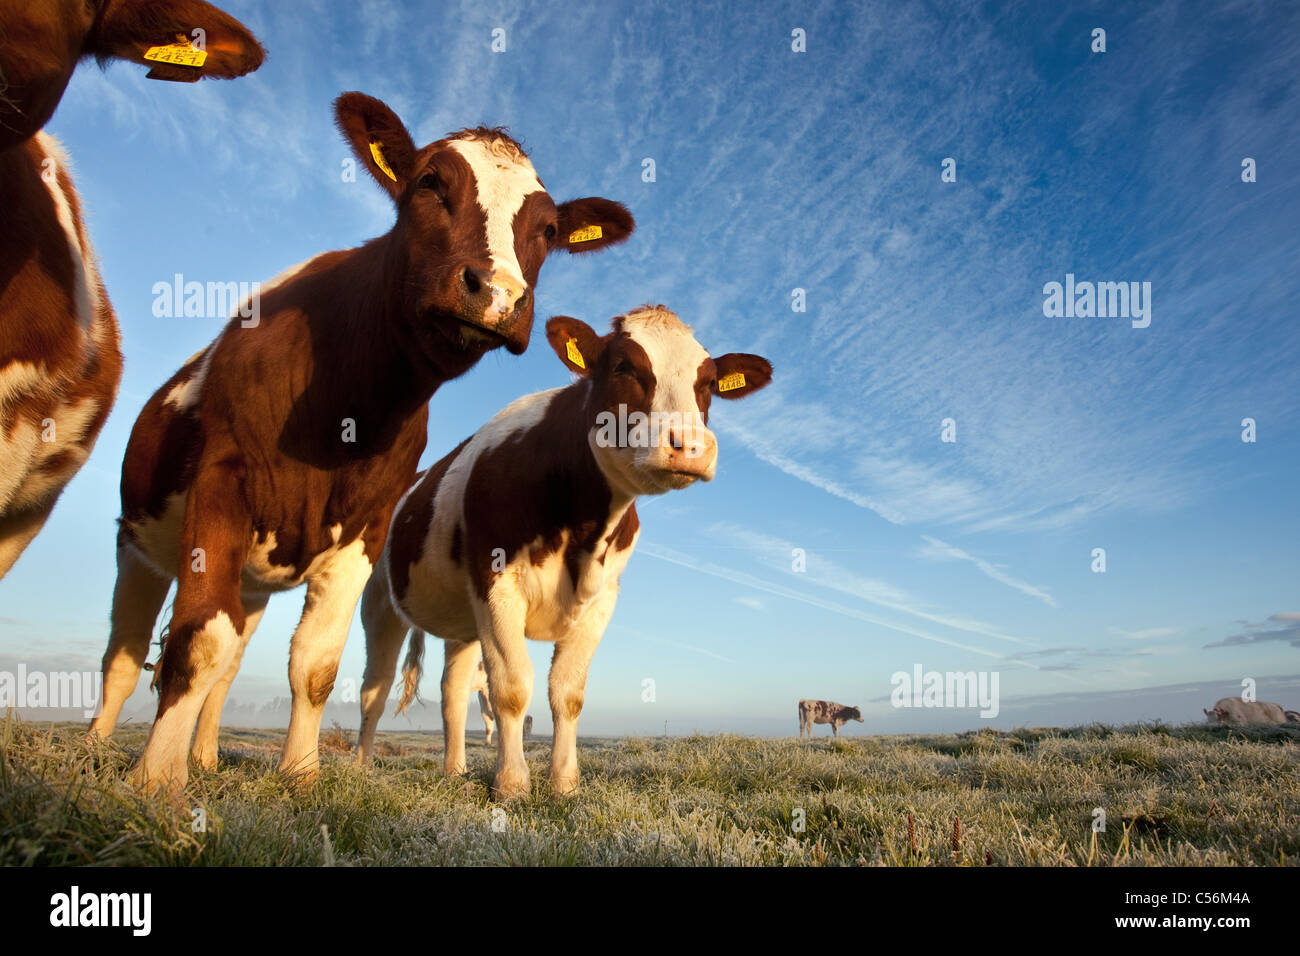 The Netherlands, Nederhorst den Berg. Cows in morning mist. Stock Photo